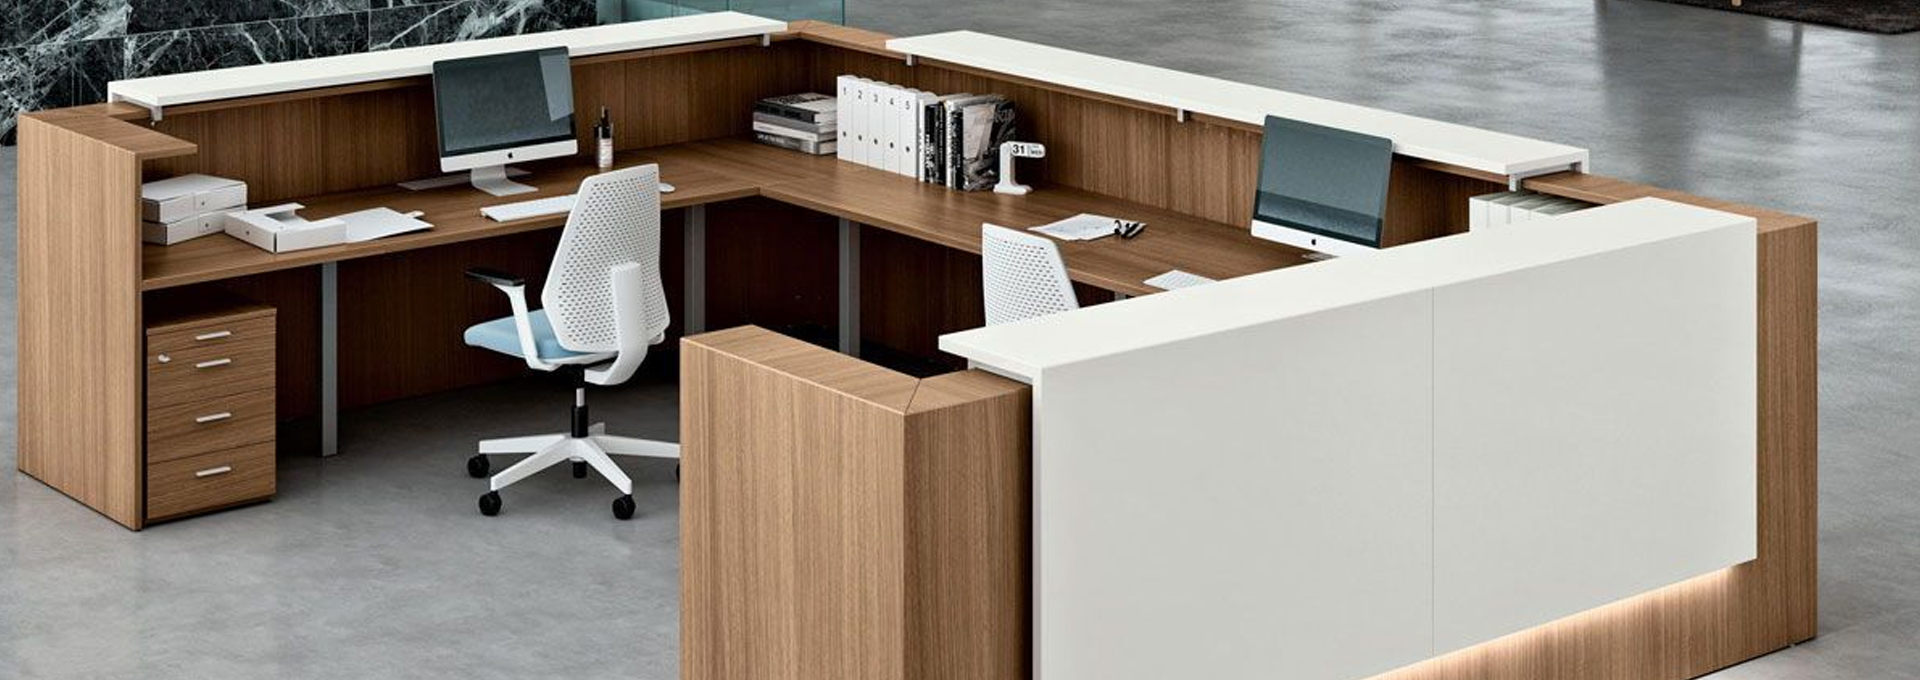 Reception Desks - office furniture in stock Gta